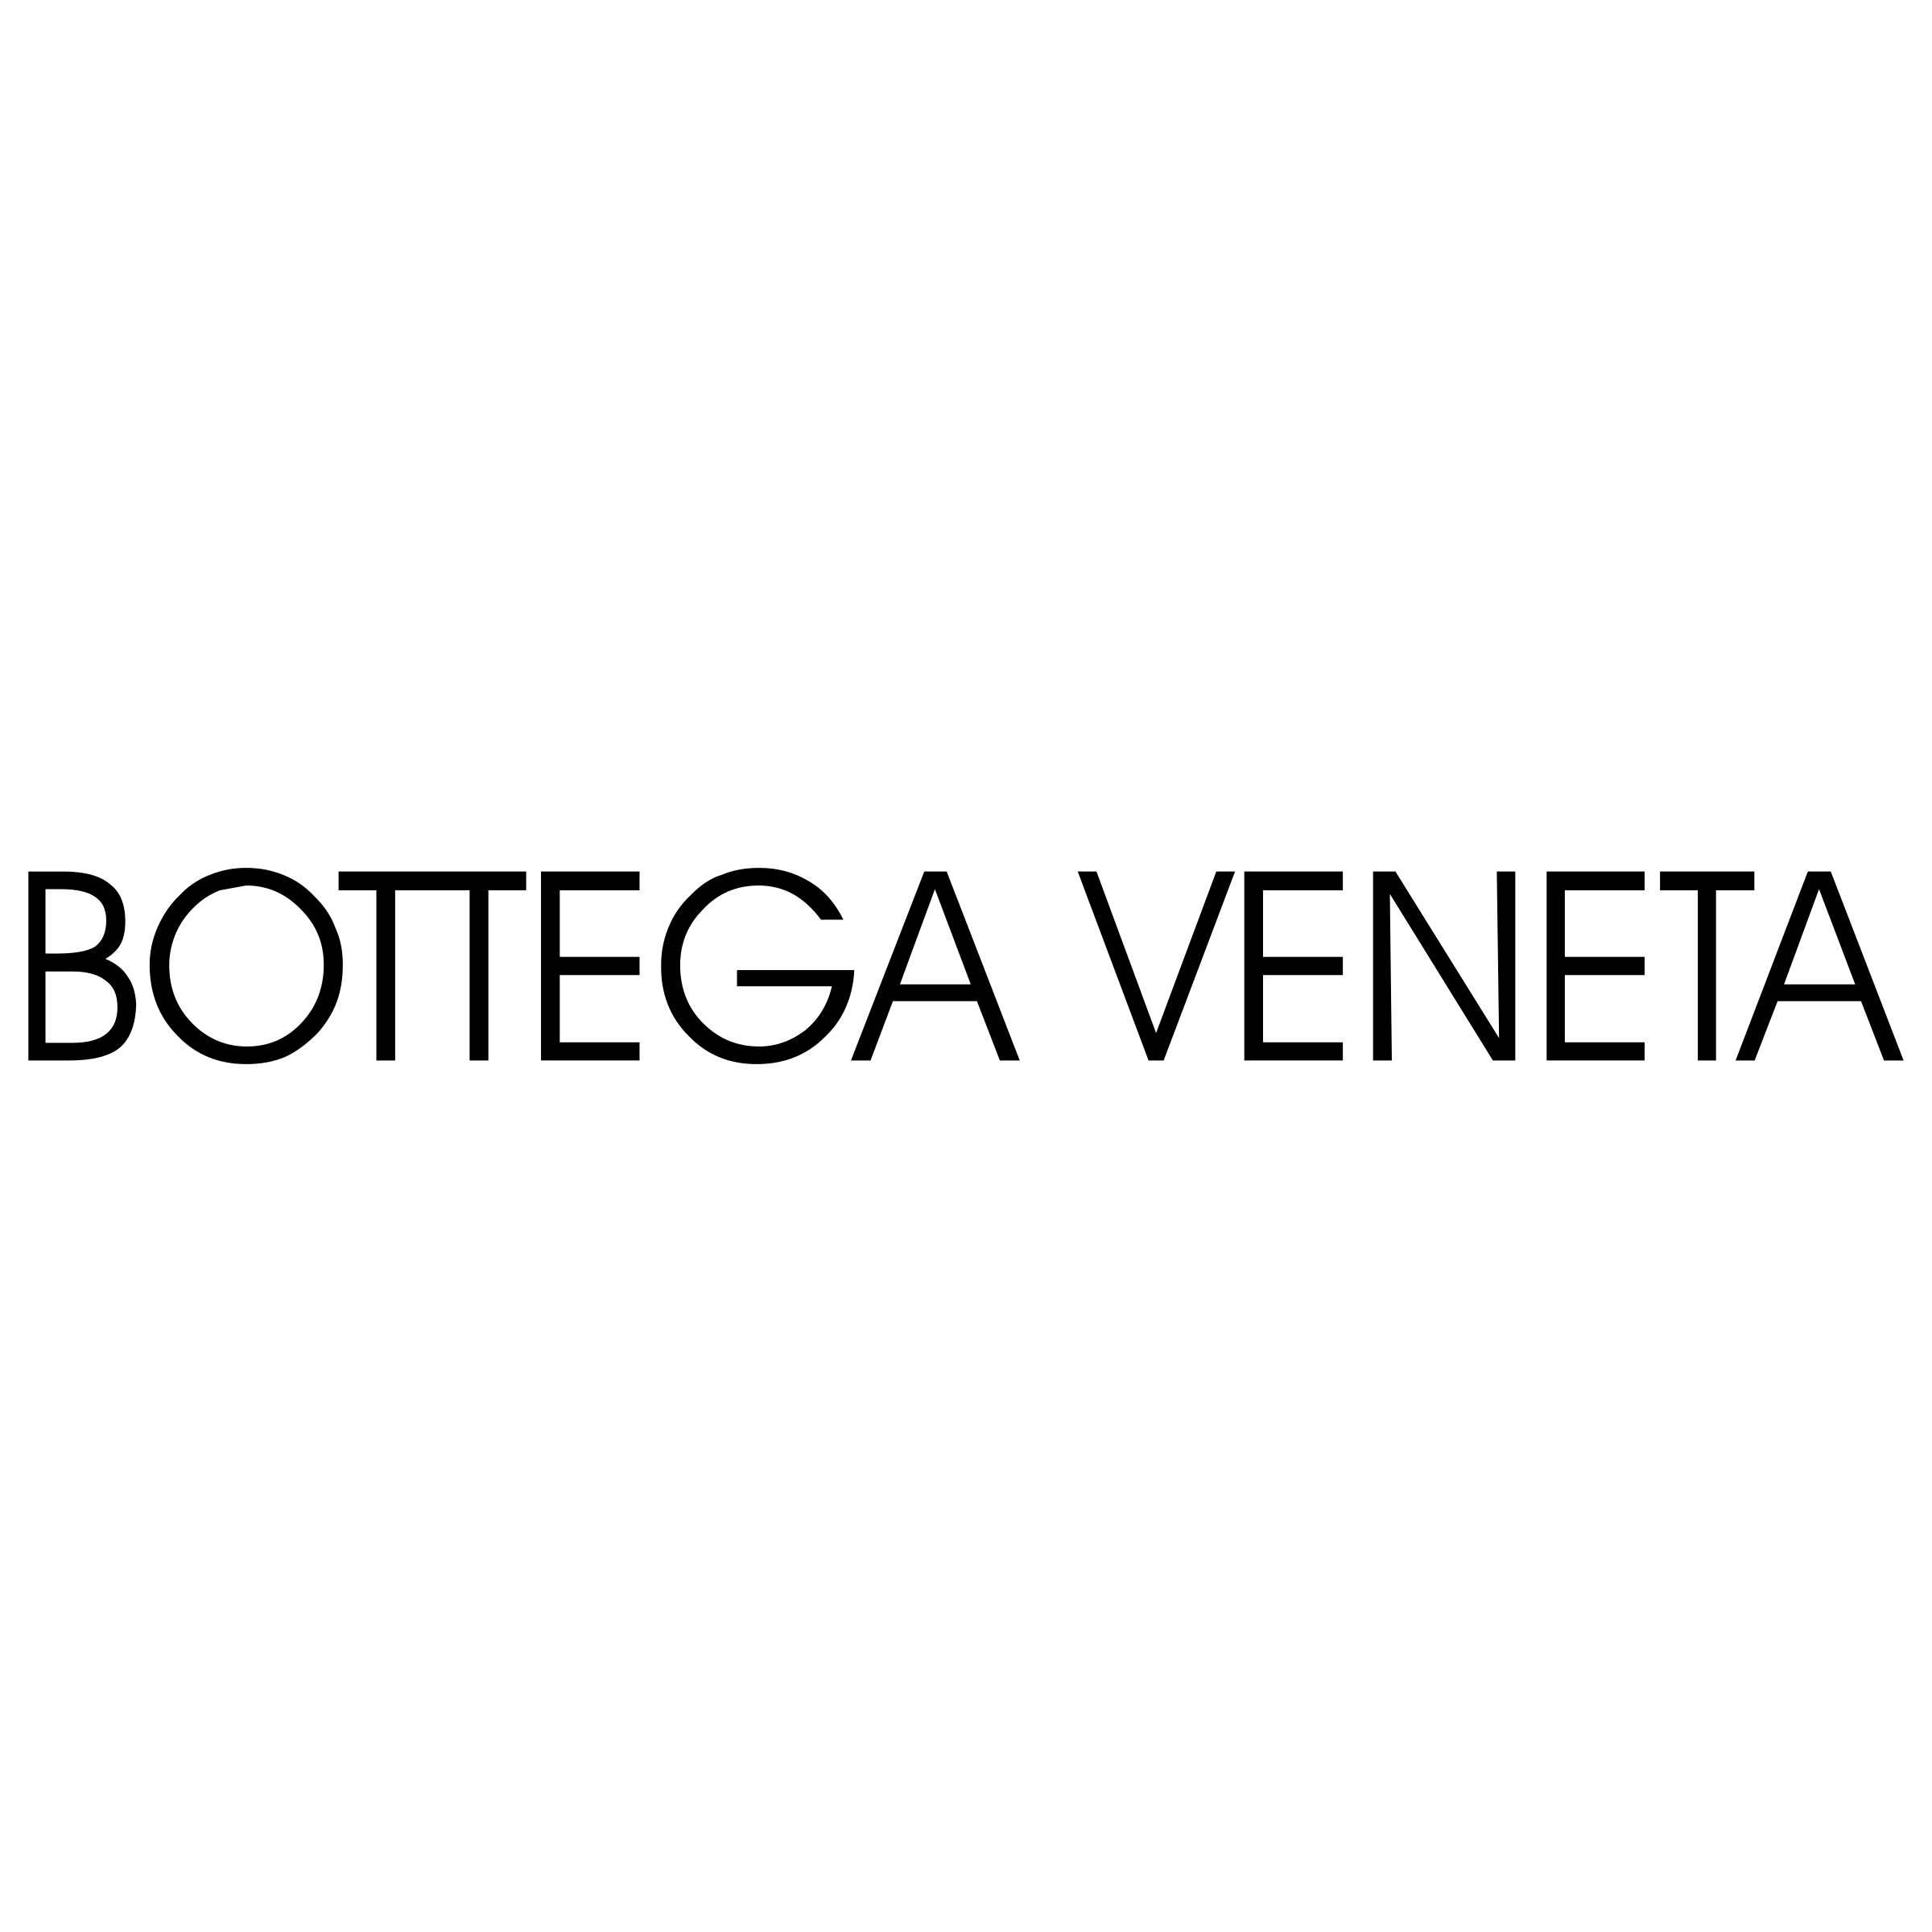 Bottega Veneta Logo - Bottega Veneta Logo PNG Transparent & SVG Vector - Freebie Supply